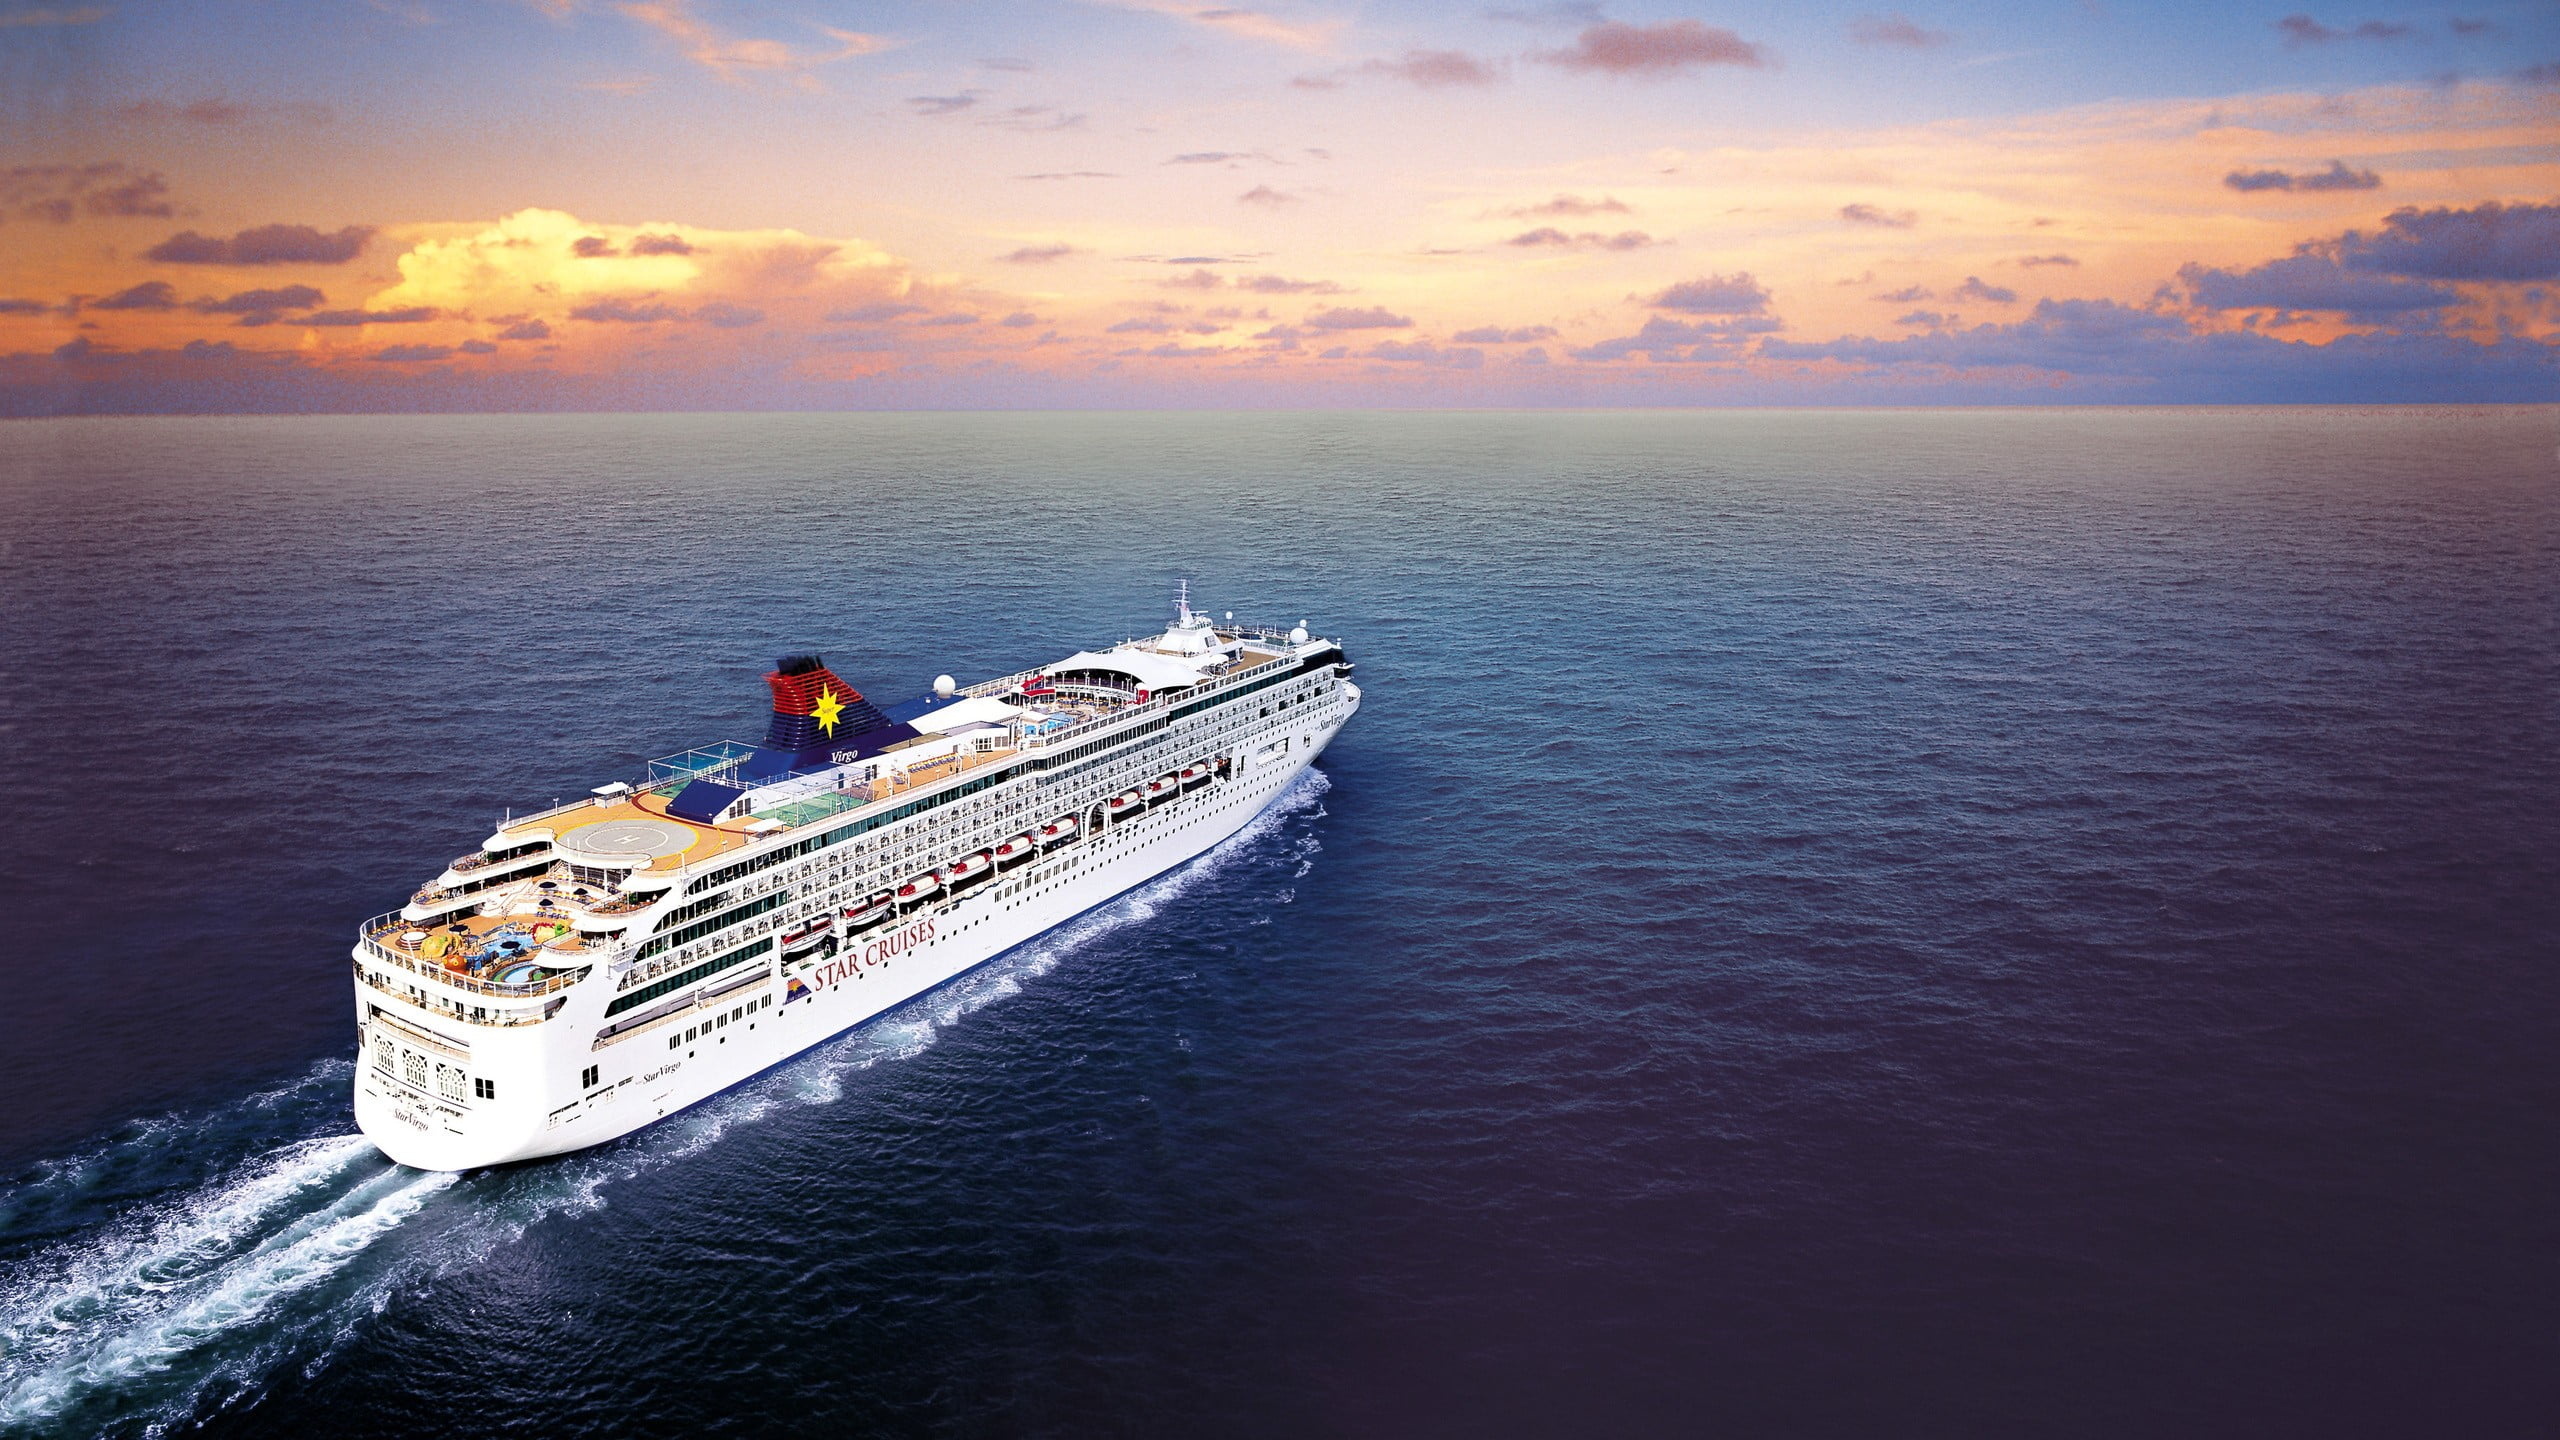 White cruise ship, Nature's beauty, Sea voyage, Wallpaper Flare, 2560x1440 HD Desktop